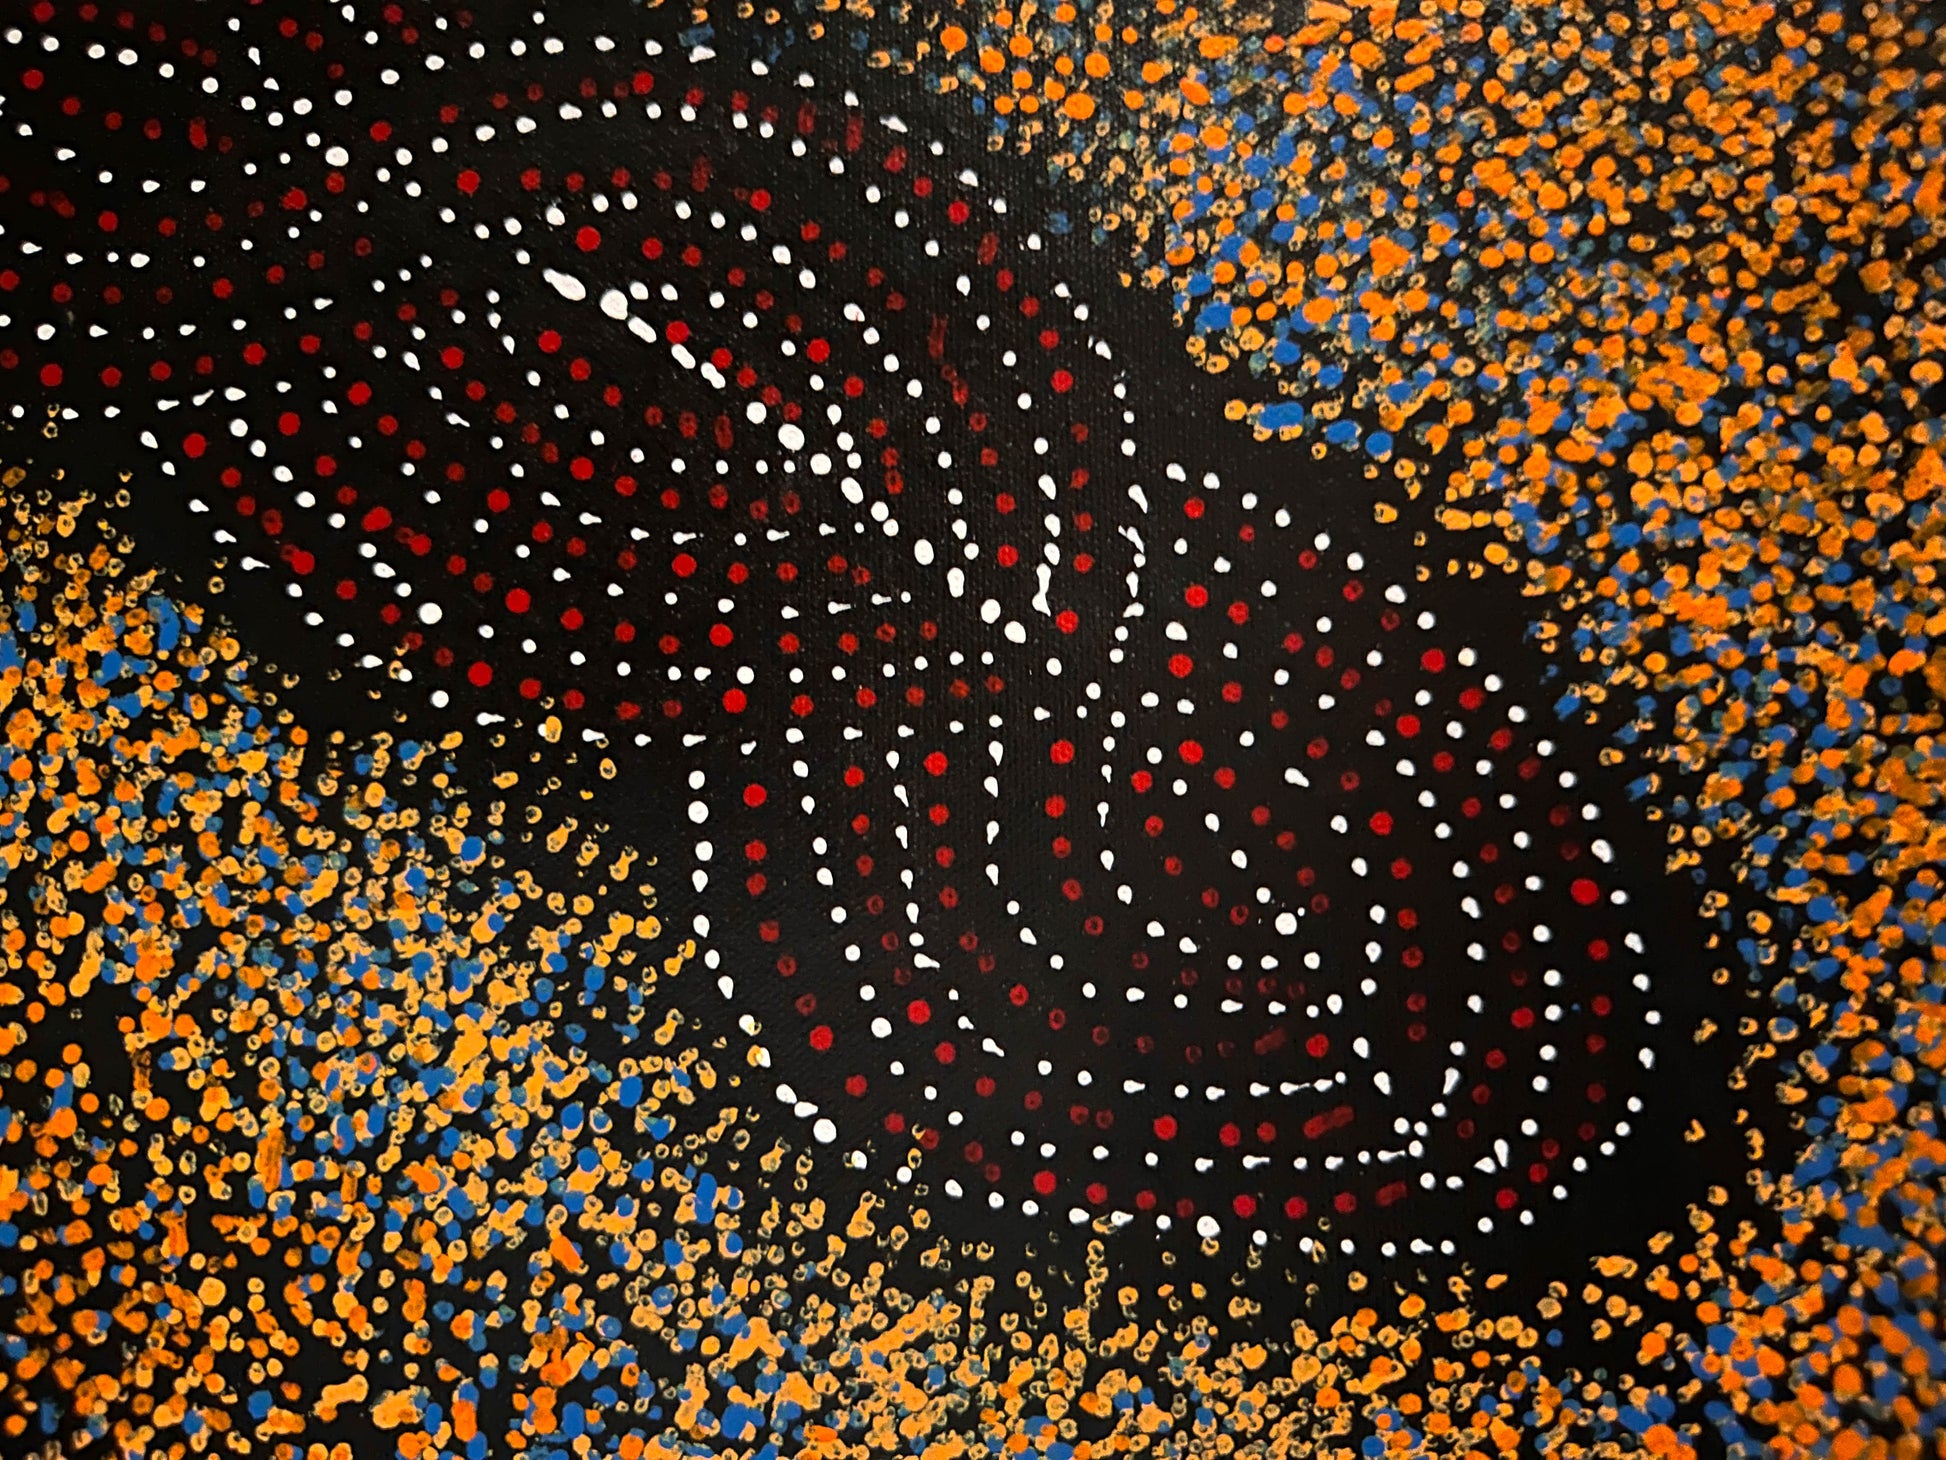 Gracie Morton Pwerle + bush plum dreaming + aboriginal art + indigenous art + australian art + darwin based art gallery + art for sale + painting for sale + artwork for sale + dot art painting + painting for sale + utopia + orange + family owned gallery + family owned business